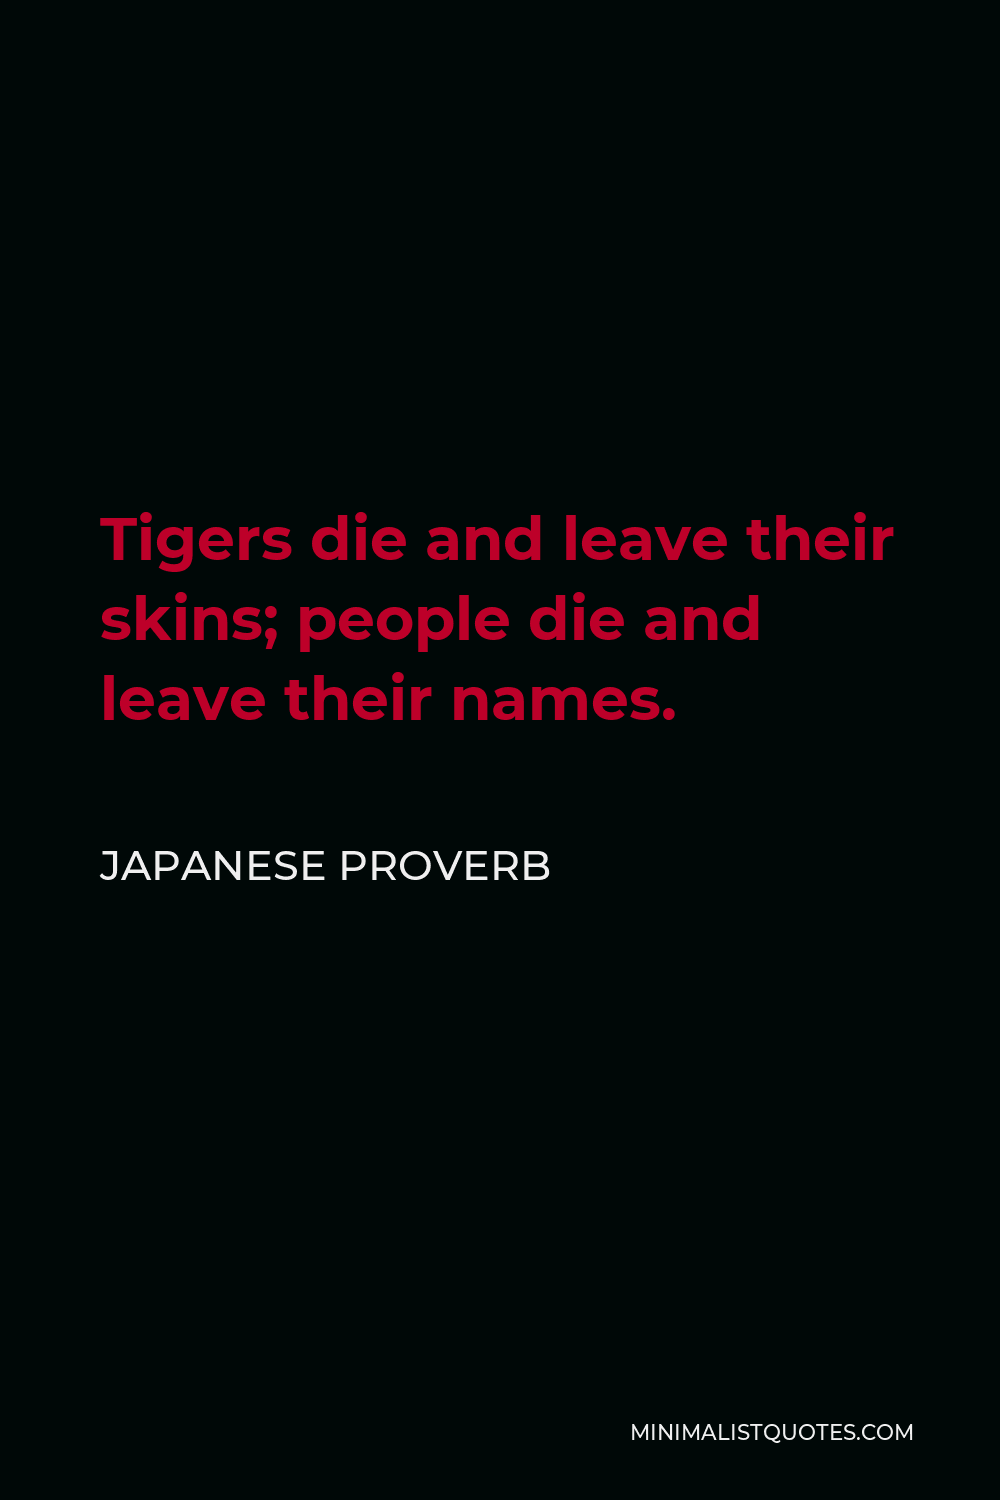 Japanese Proverb Quote - Tigers die and leave their skins; people die and leave their names.